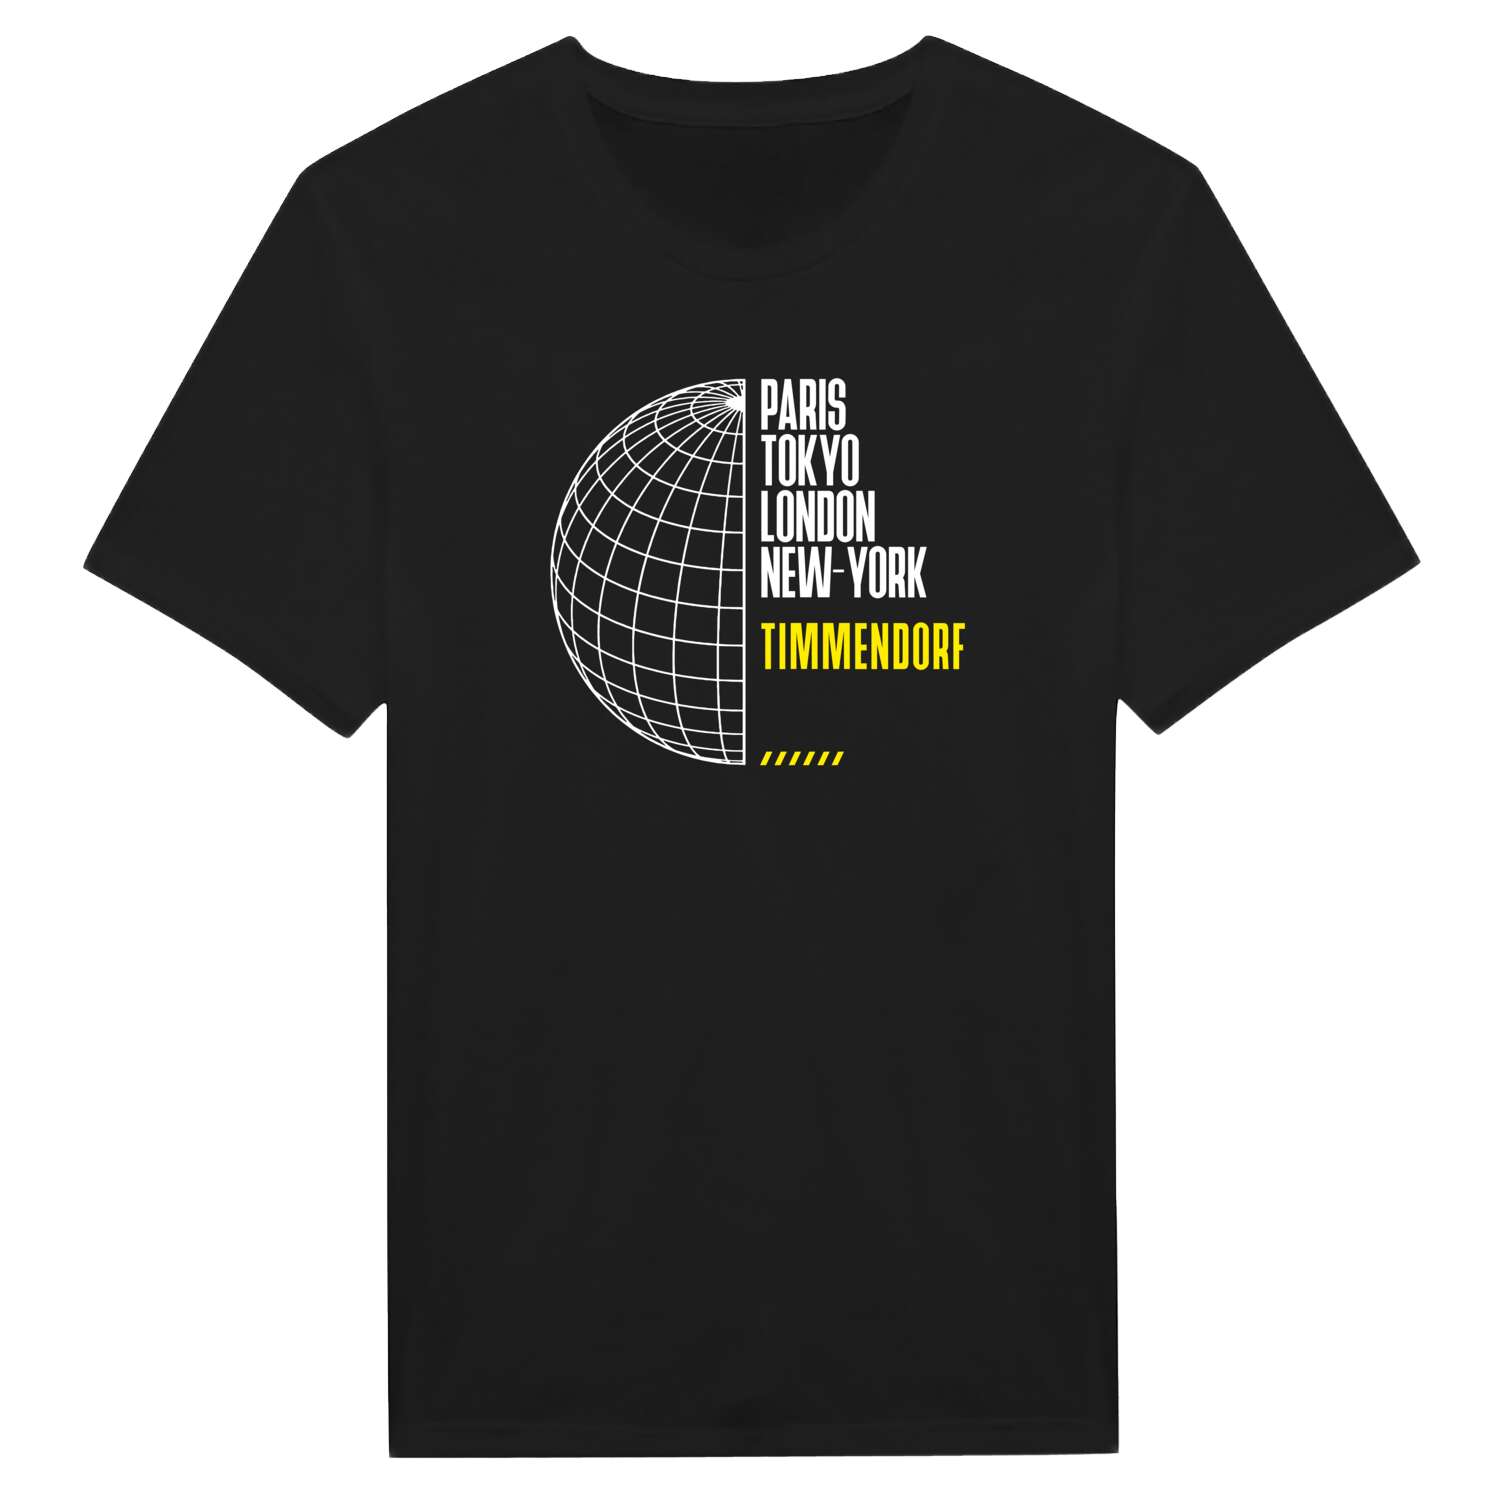 Timmendorf T-Shirt »Paris Tokyo London«